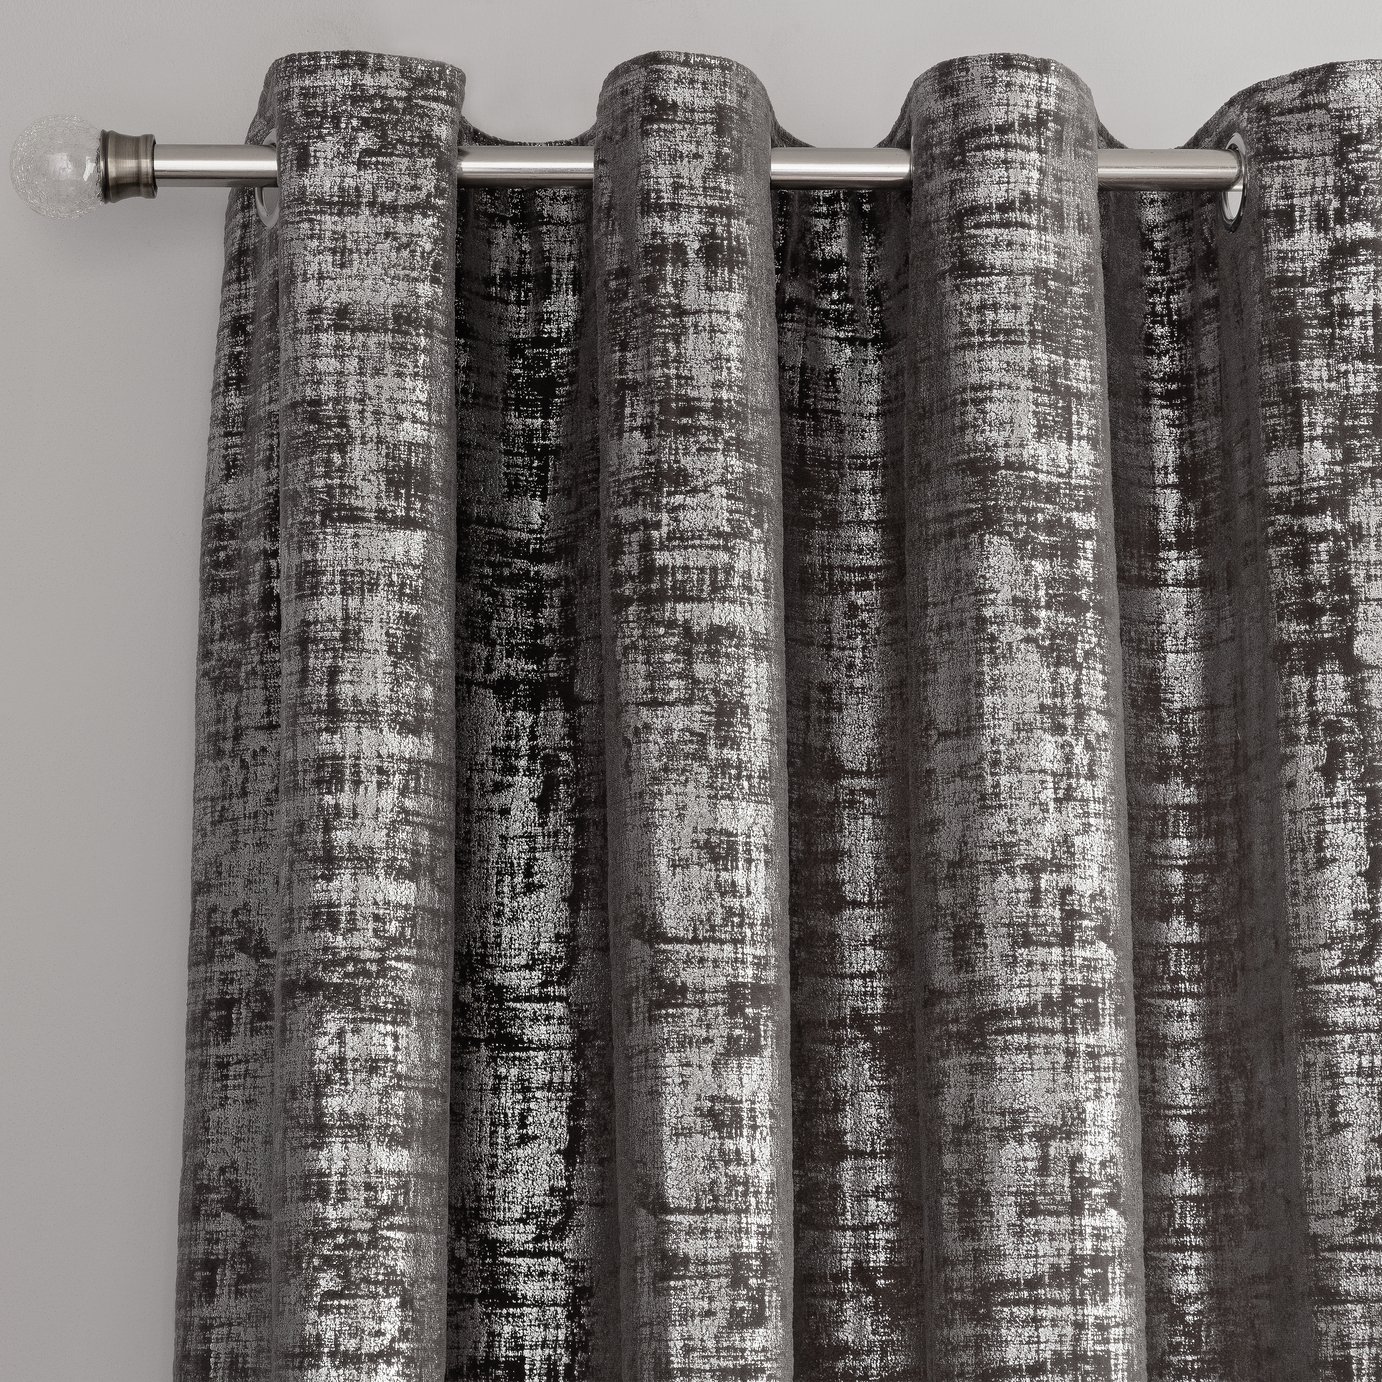 Argos Home Velvet Lined Eyelet Curtains - Grey